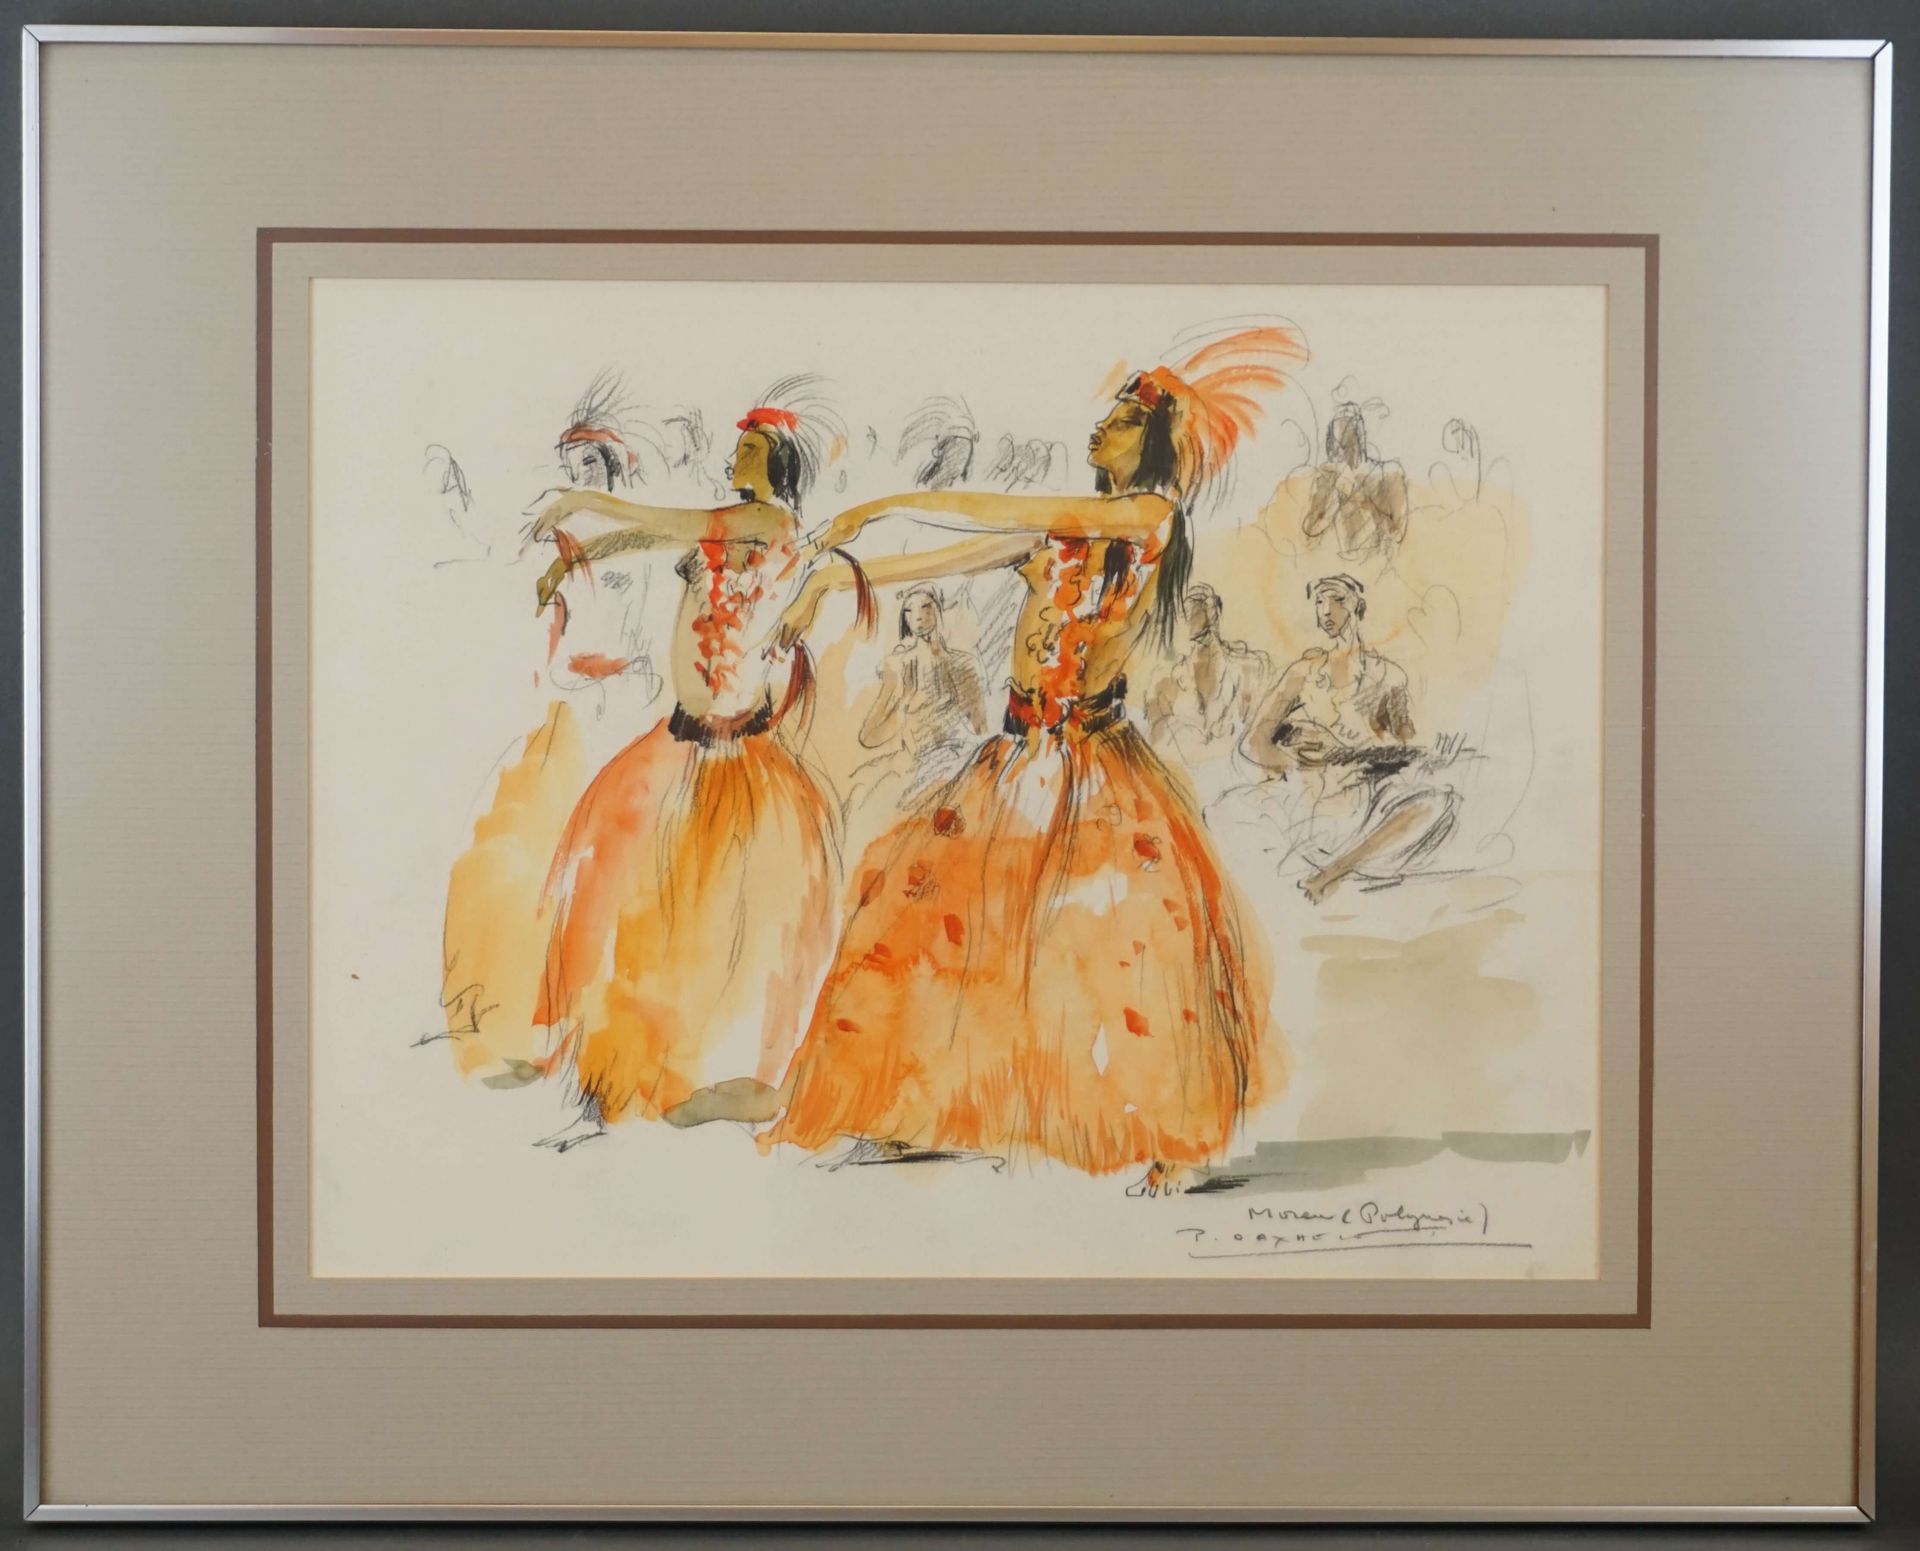 DAXHELET Paul (1905-1993) 签名为P. Daxhelet的水彩画 "波利尼西亚舞者"。27x35厘米